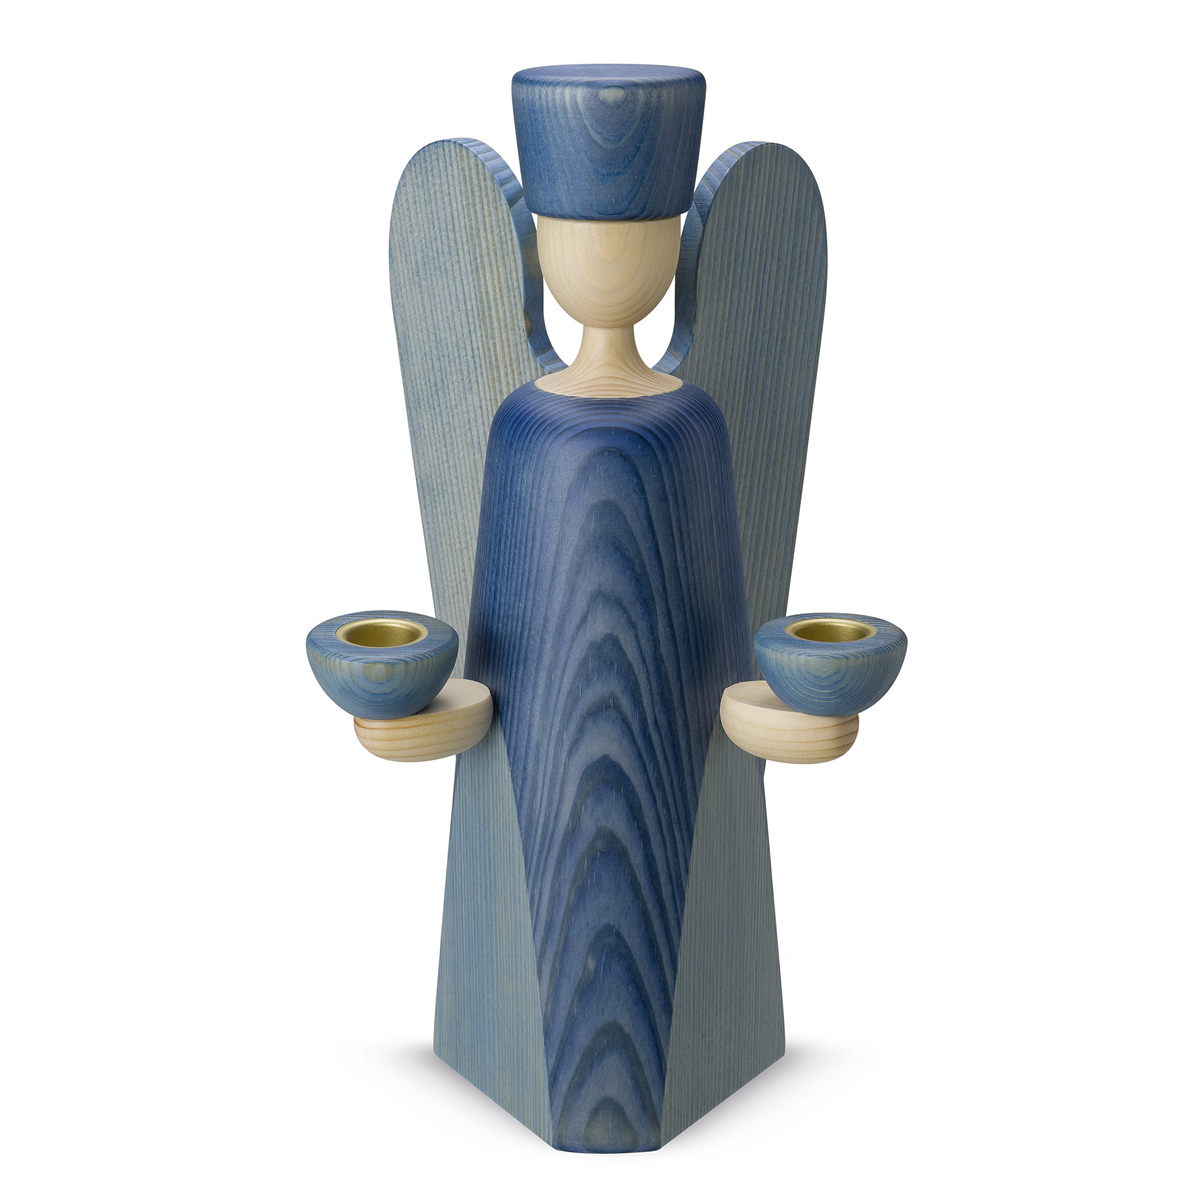 Angel candle holder, large, blue